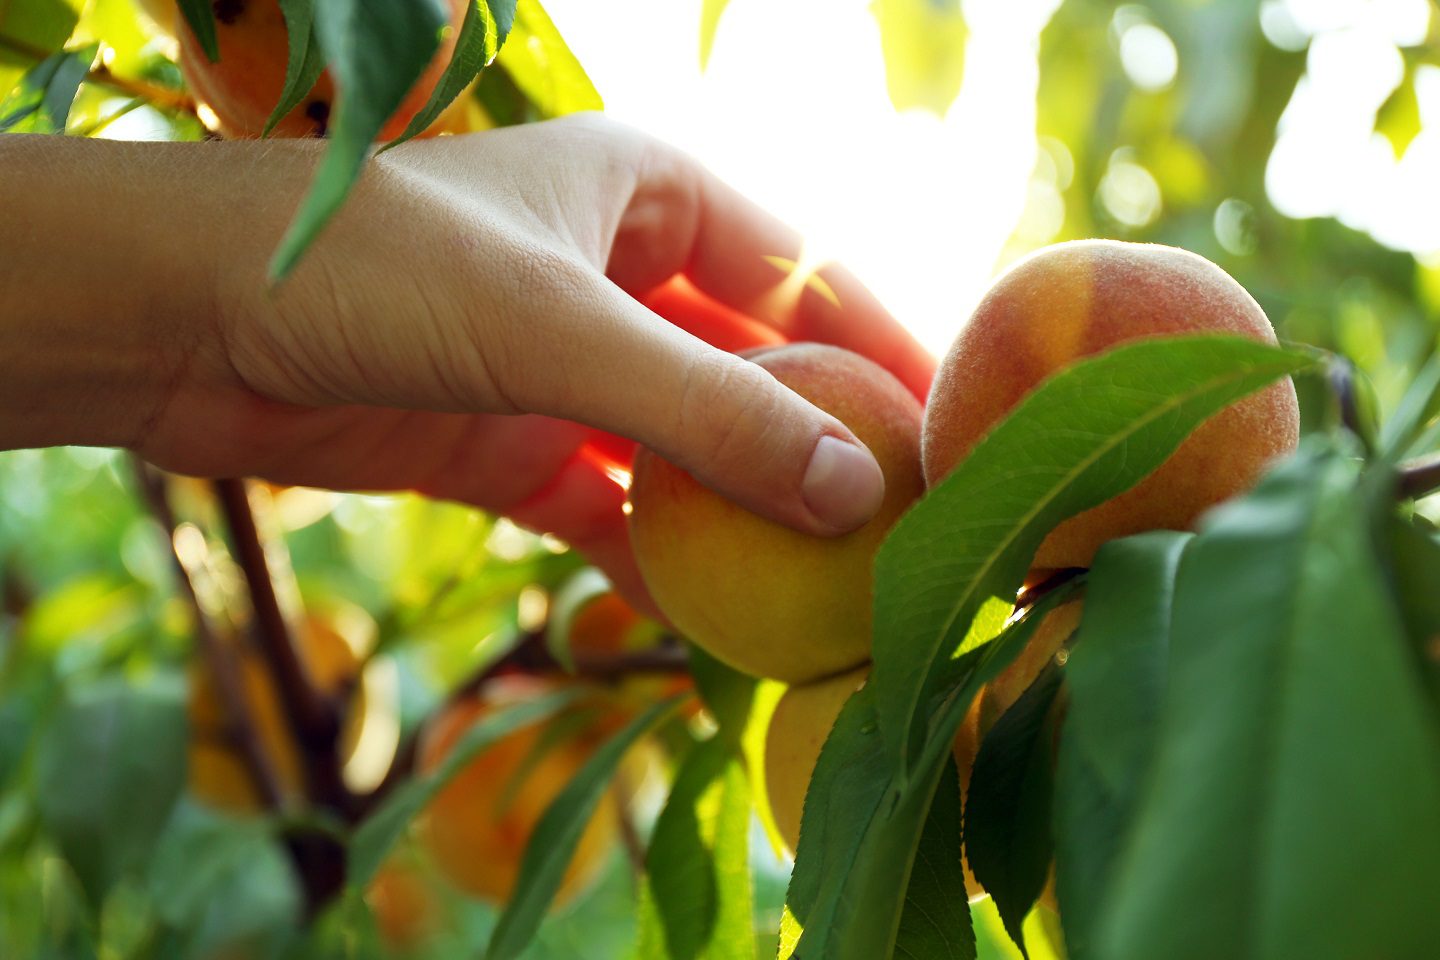 Picking ripe peach fruit off tree branch